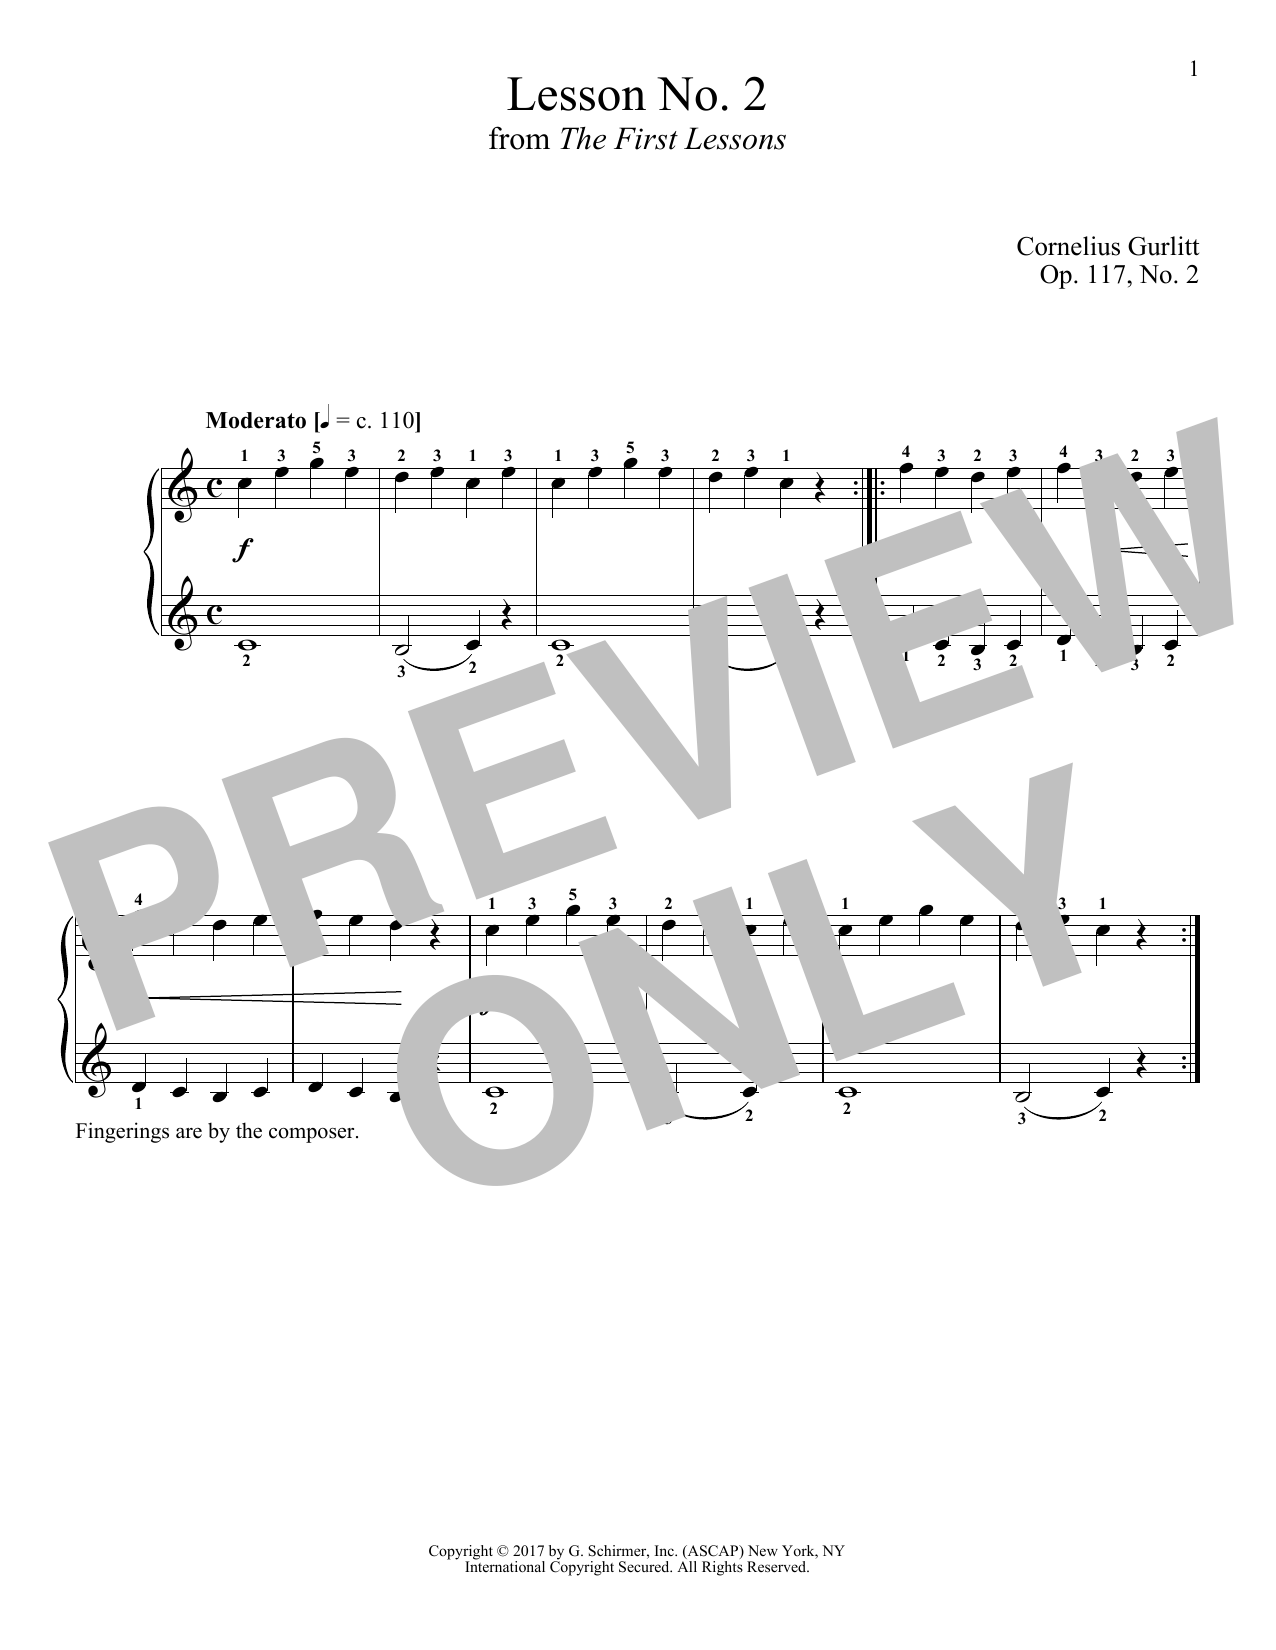 Cornelius Gurlitt Moderato, Op. 117, No. 2 Sheet Music Notes & Chords for Piano - Download or Print PDF